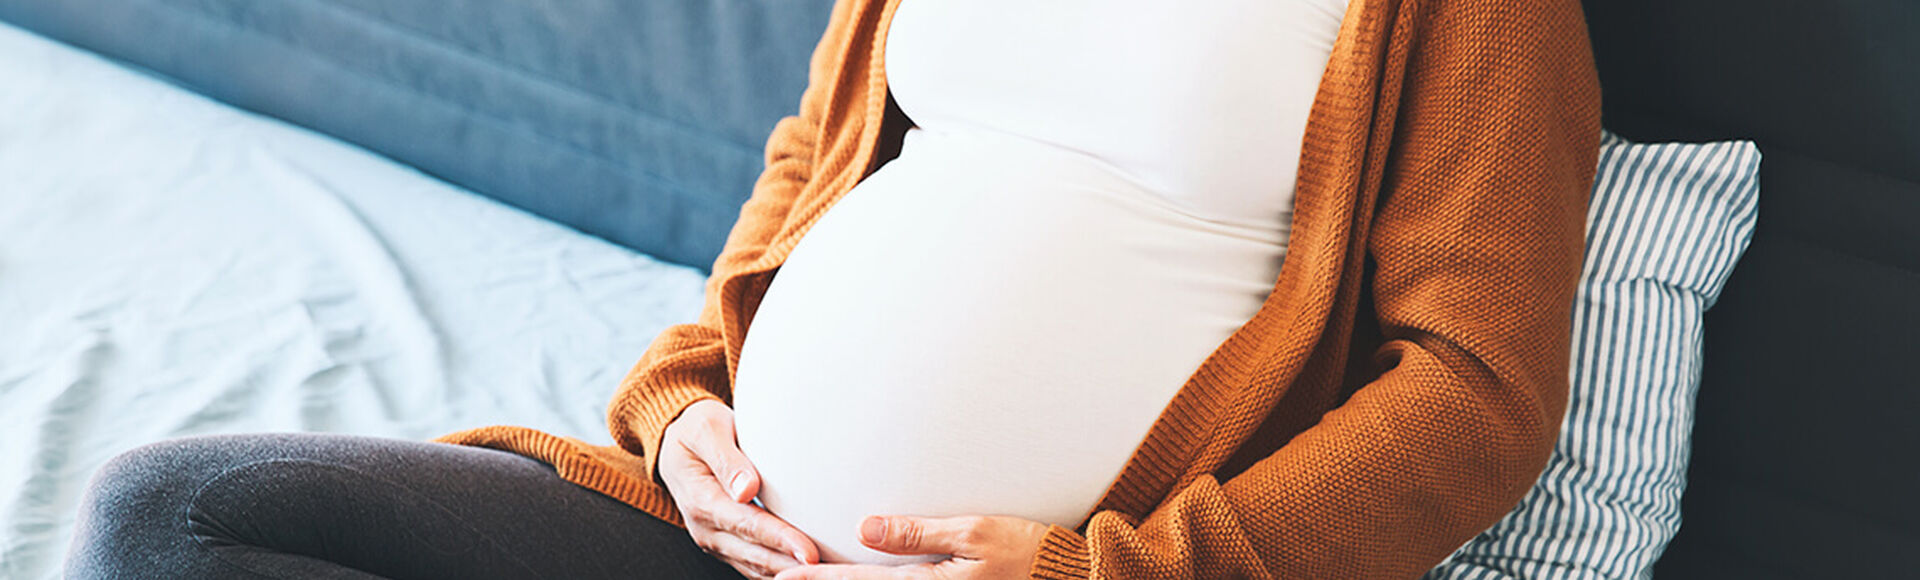 embarazo múltiple factores de riesgo